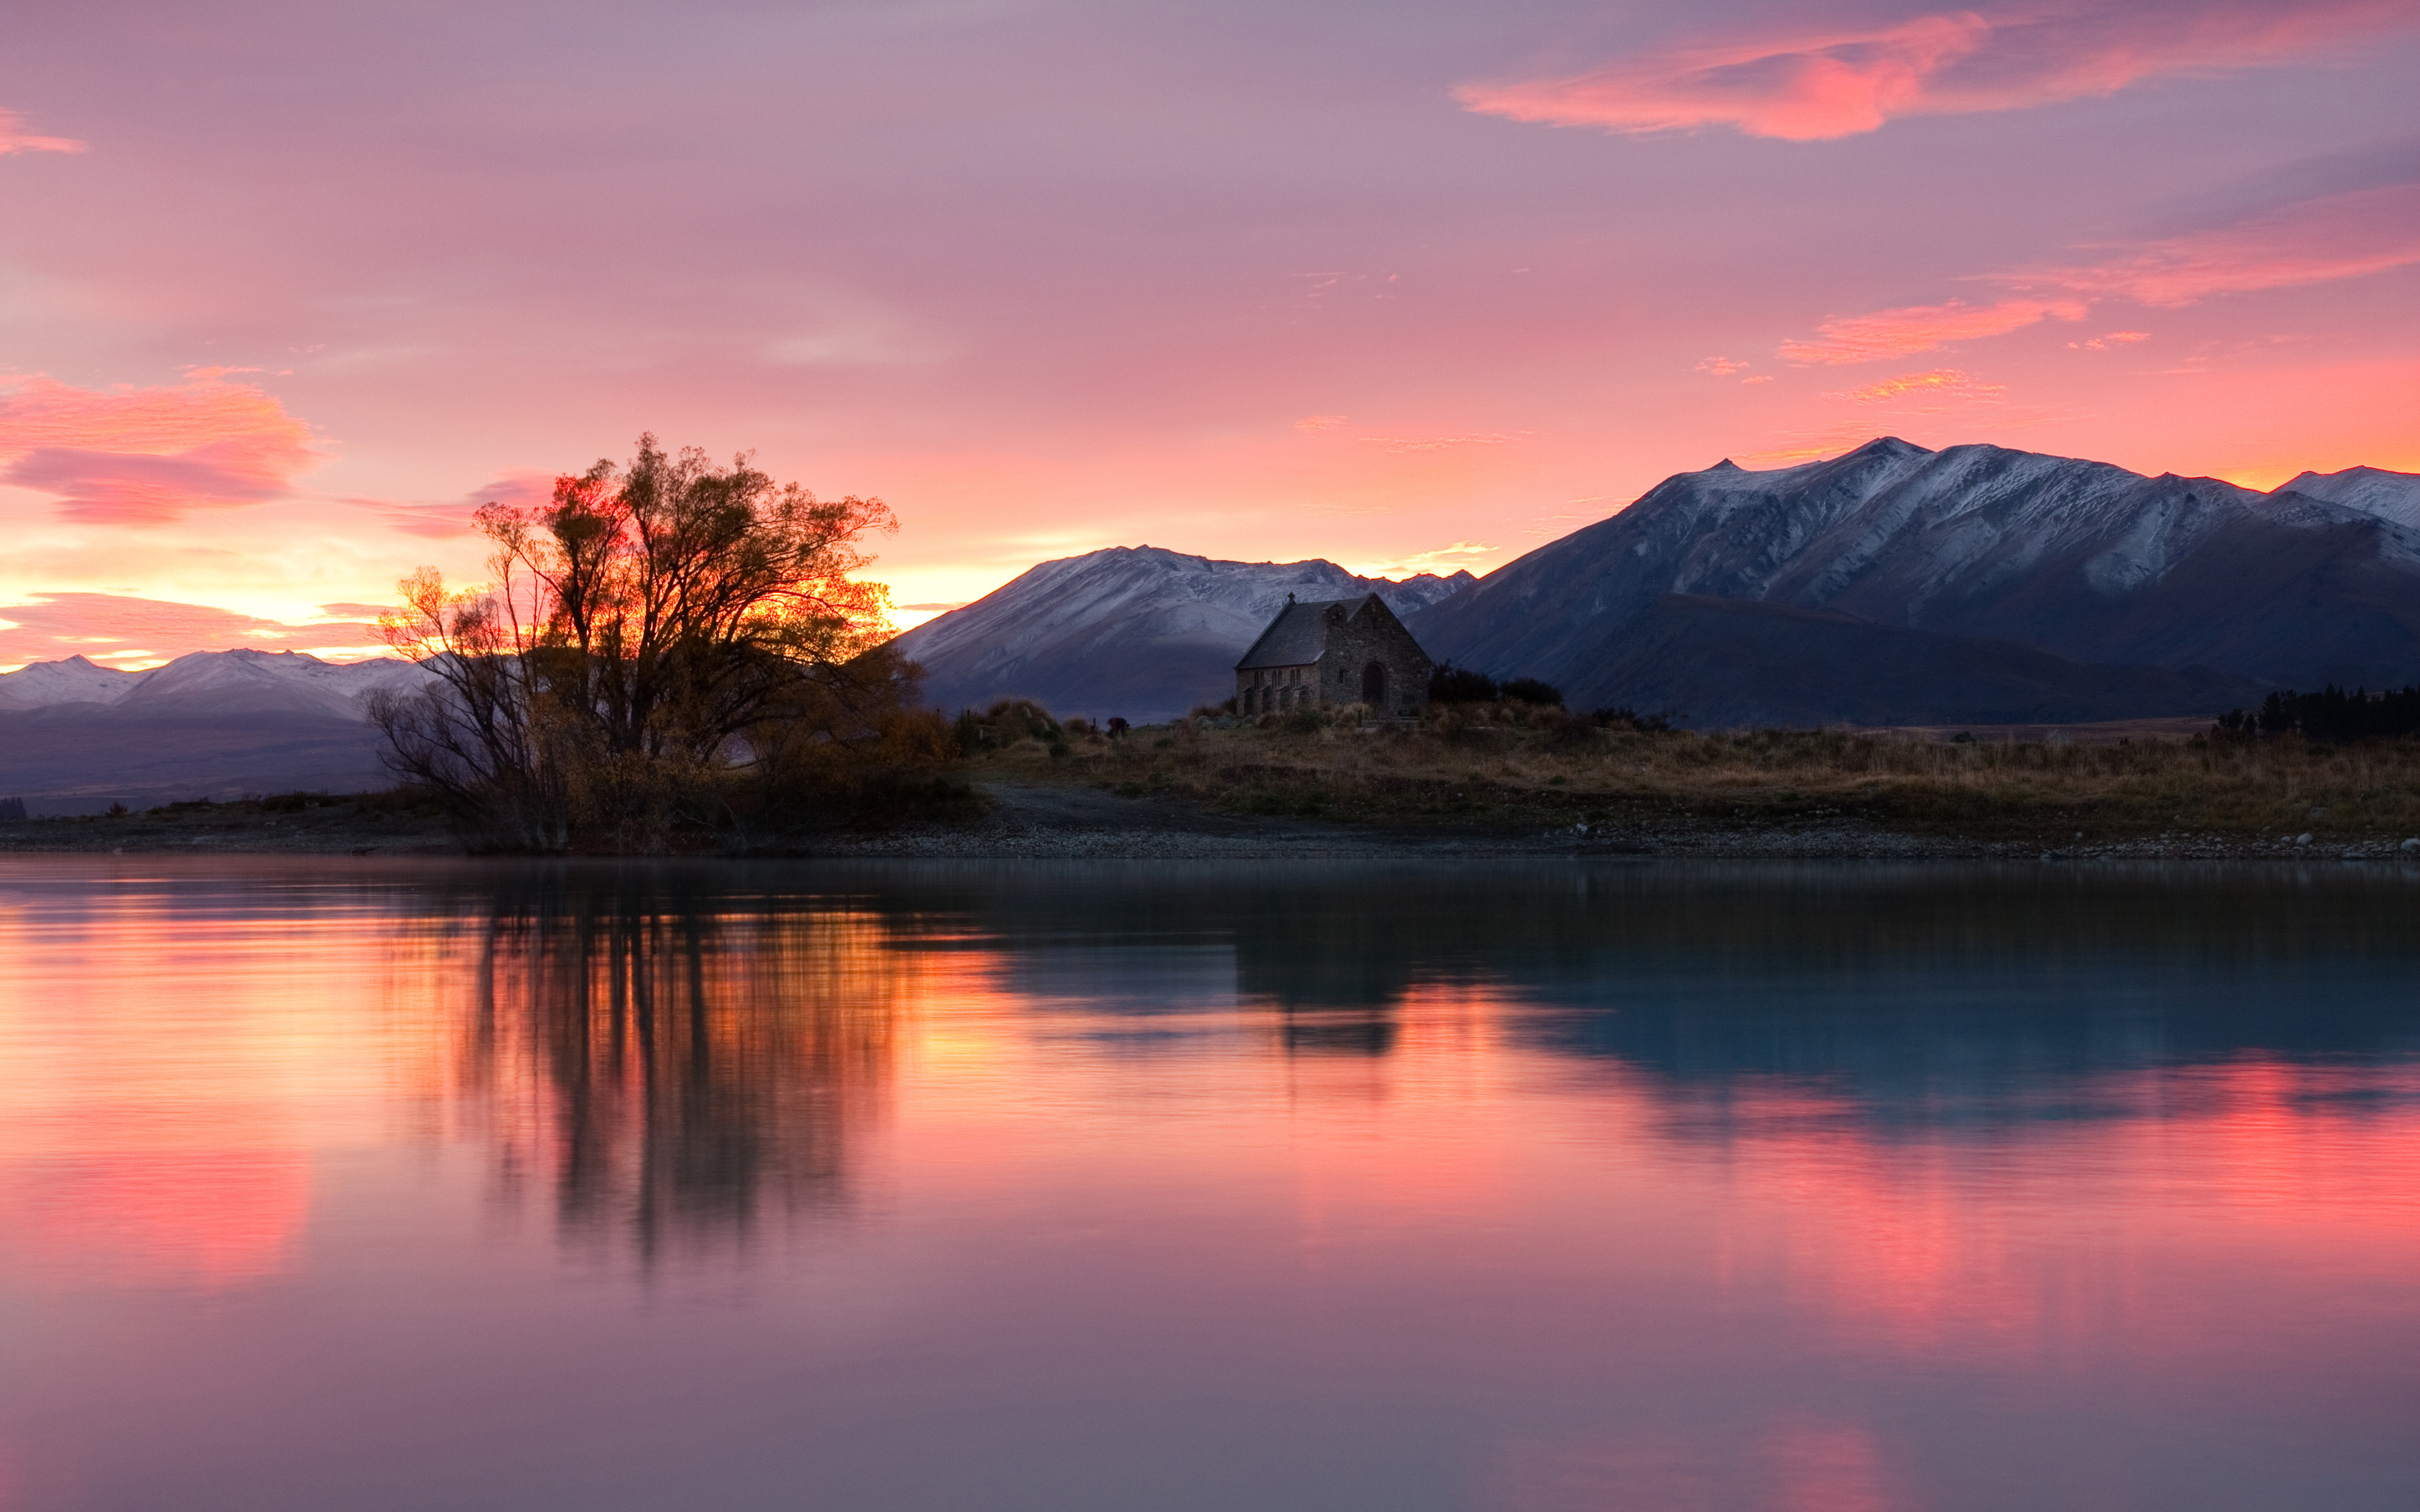 Dawn at Lake Tekapo, New Zealand wallpaper and image, picture, photo